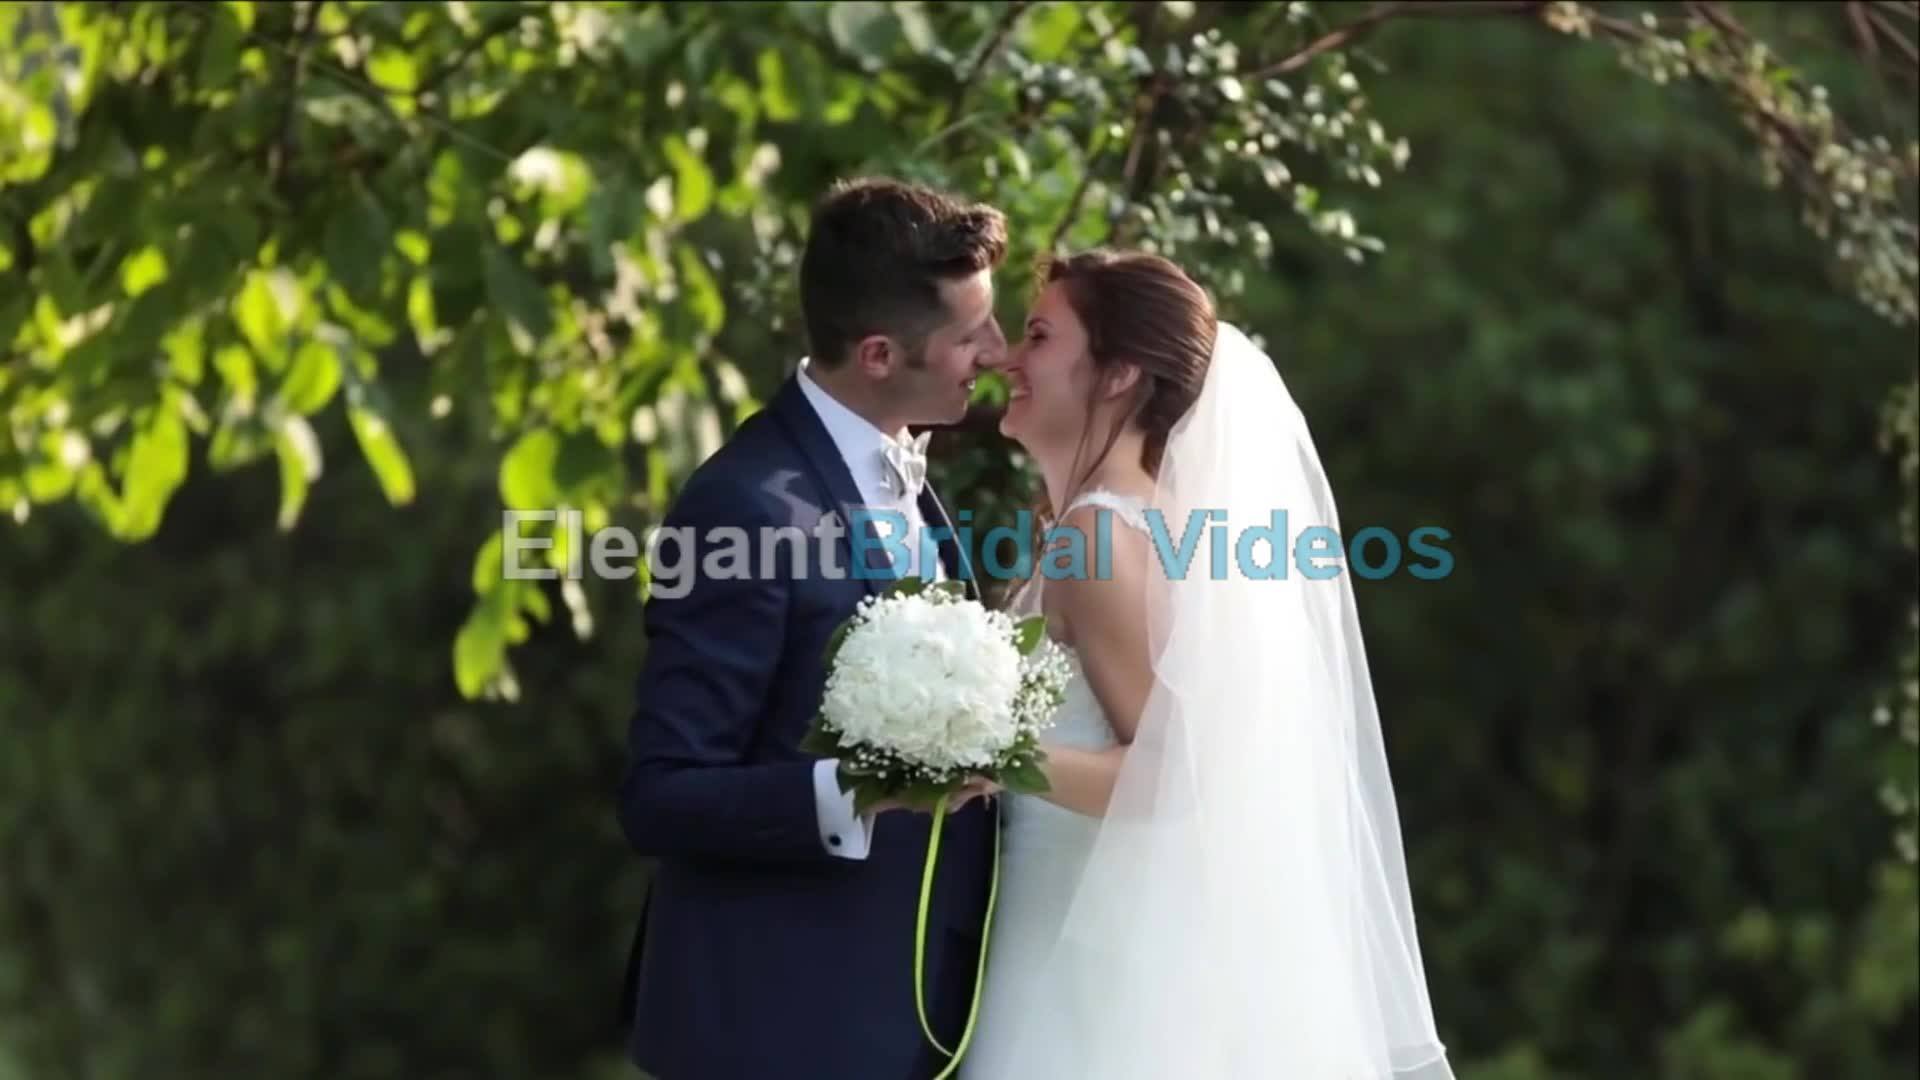 Elegant Bridal Videos